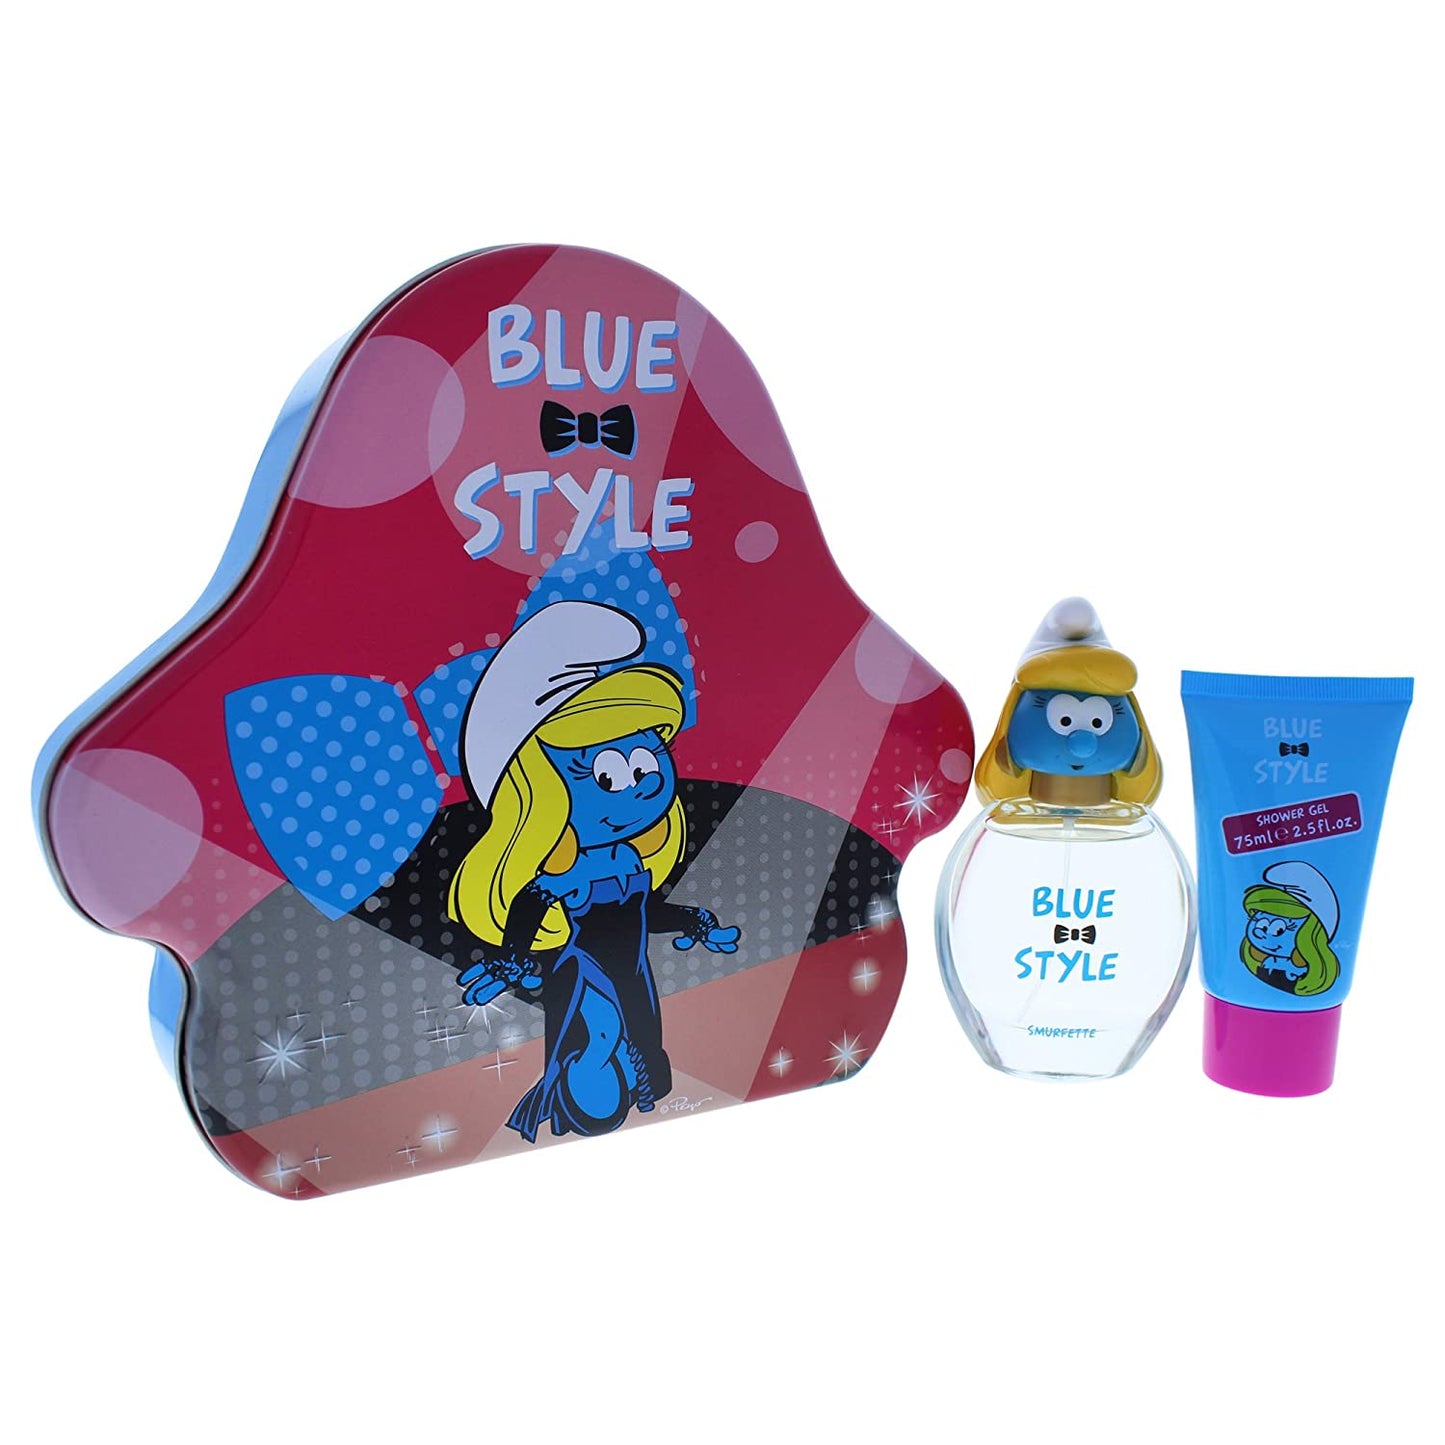 Smurfs Smurfette by Smurfs Kids 2 Piece Gift Set (1.7 oz Eau de Toilette Spray + Shower Gel) | FragranceBaba.com